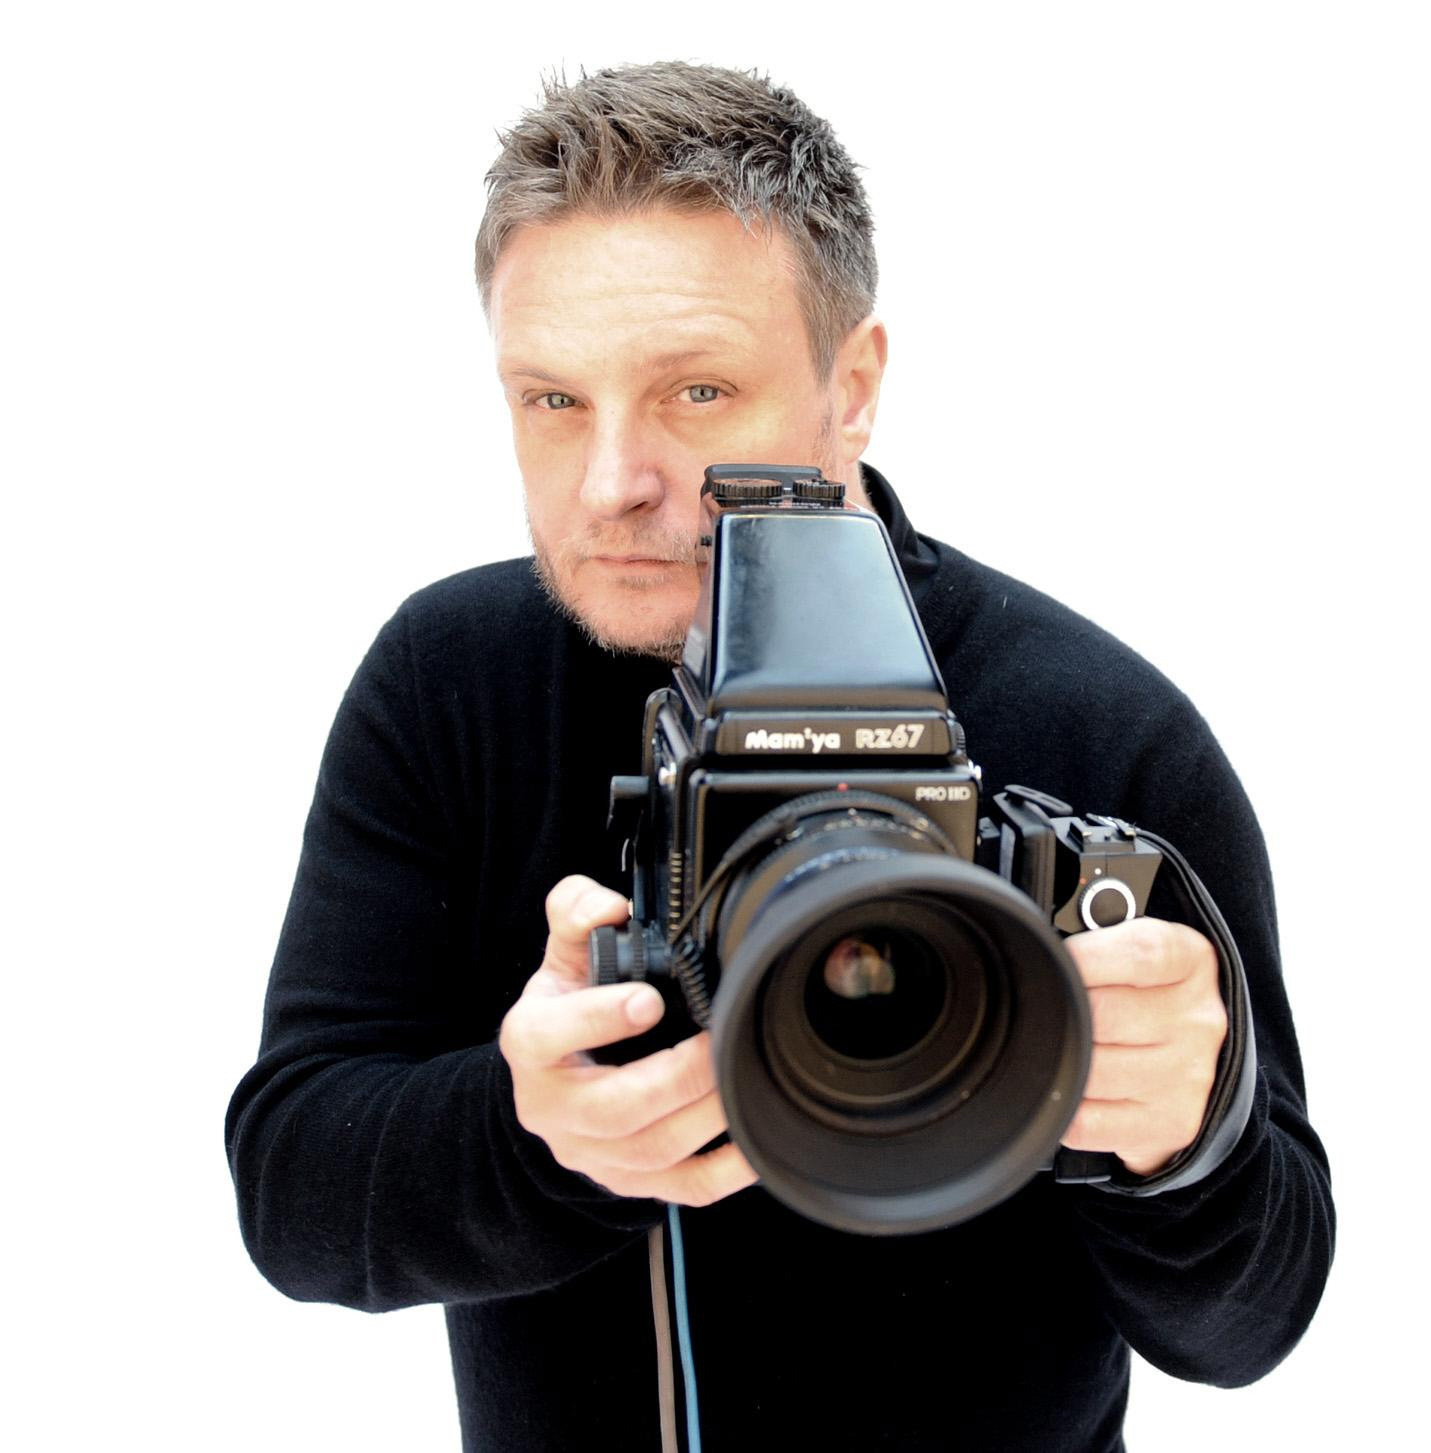 Celebrity photographer Rankin in 2009 (Anthony Devlin/PA)